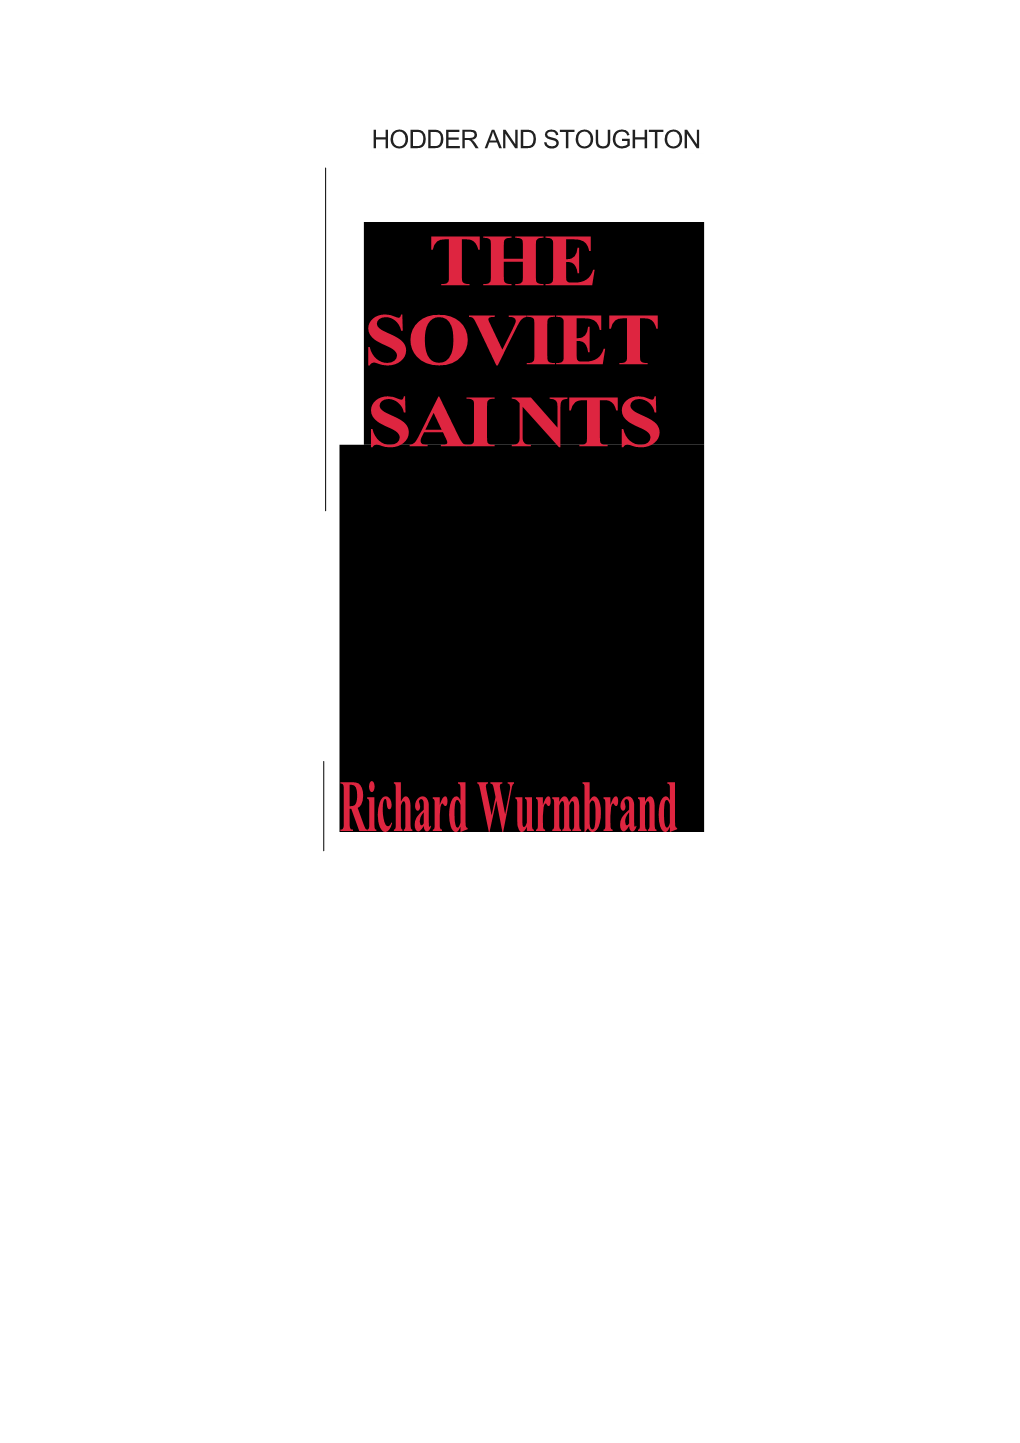 The Soviet Saints